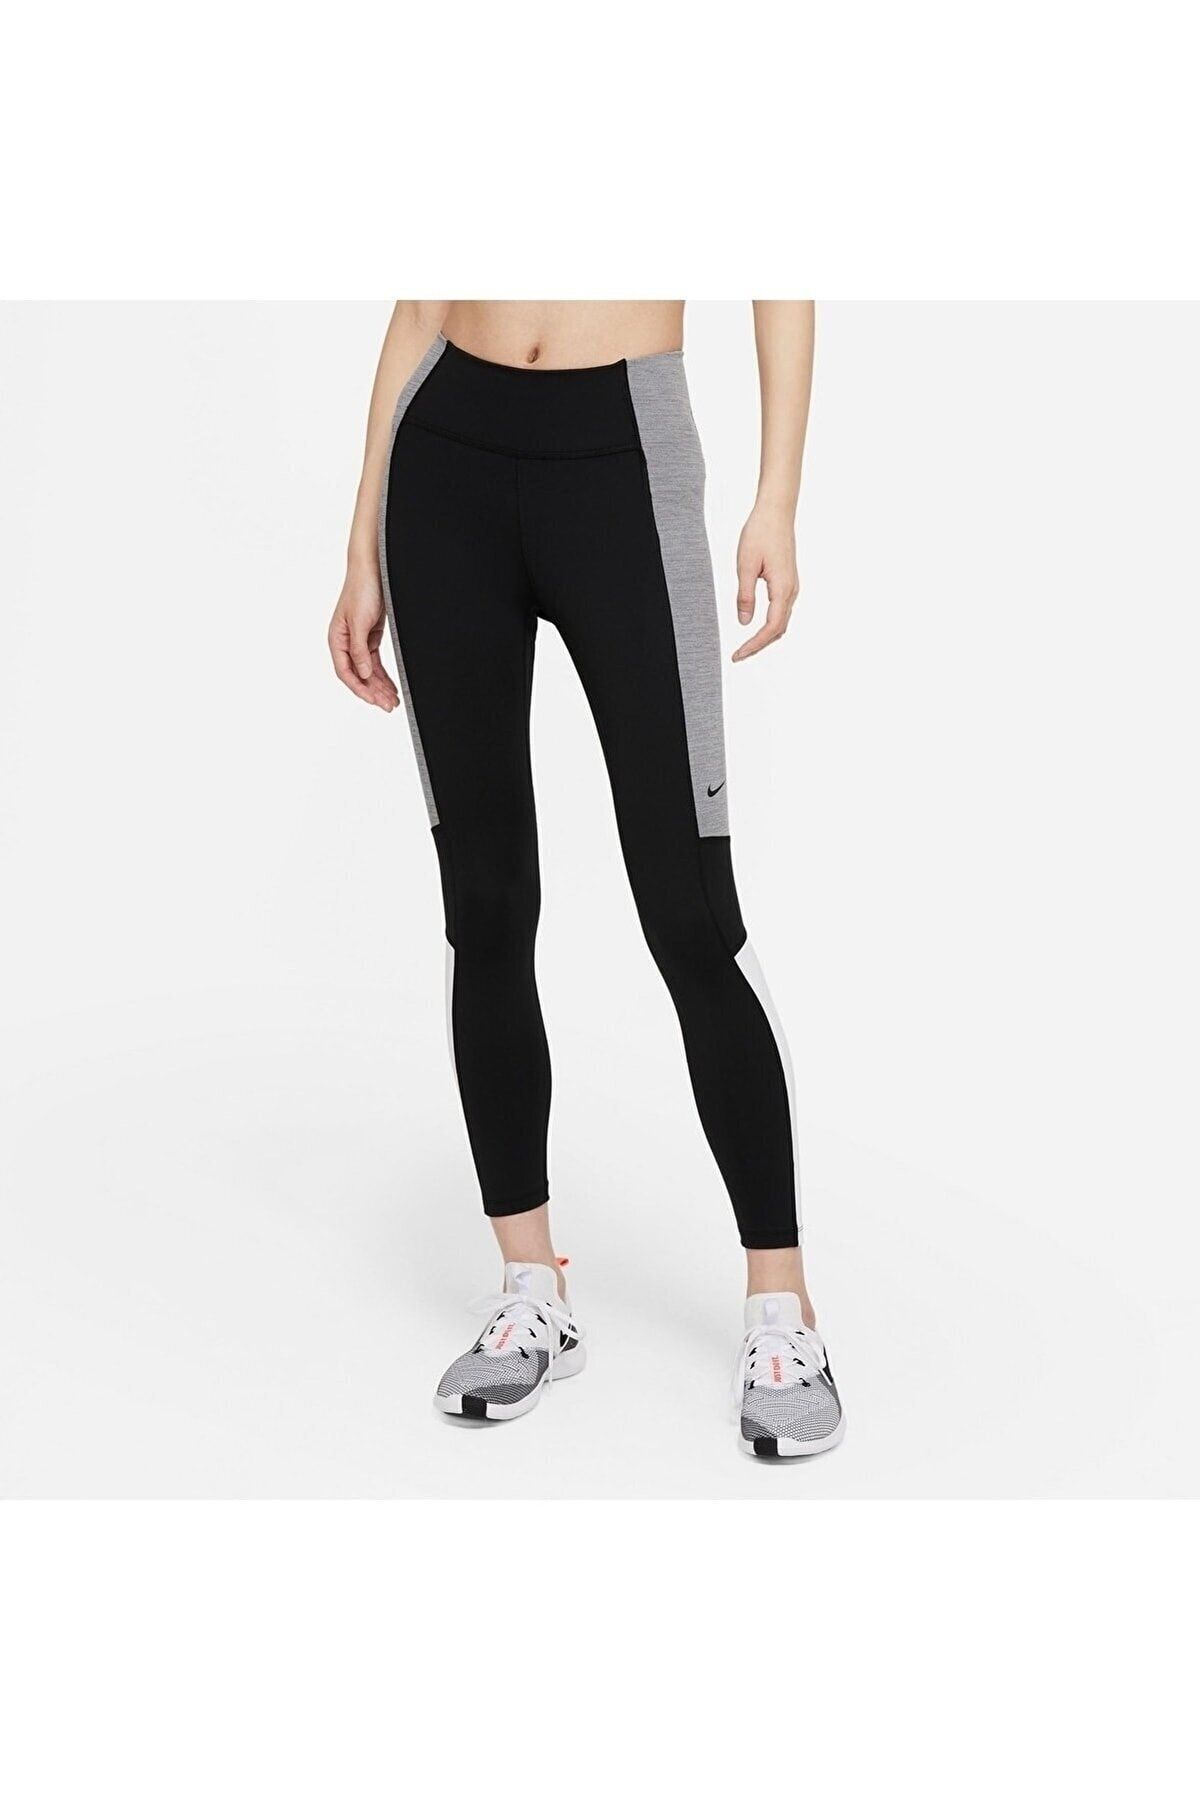 Nike Dri-fit One Women's Regular Waist 7/8 Color Blocked Tights - Trendyol